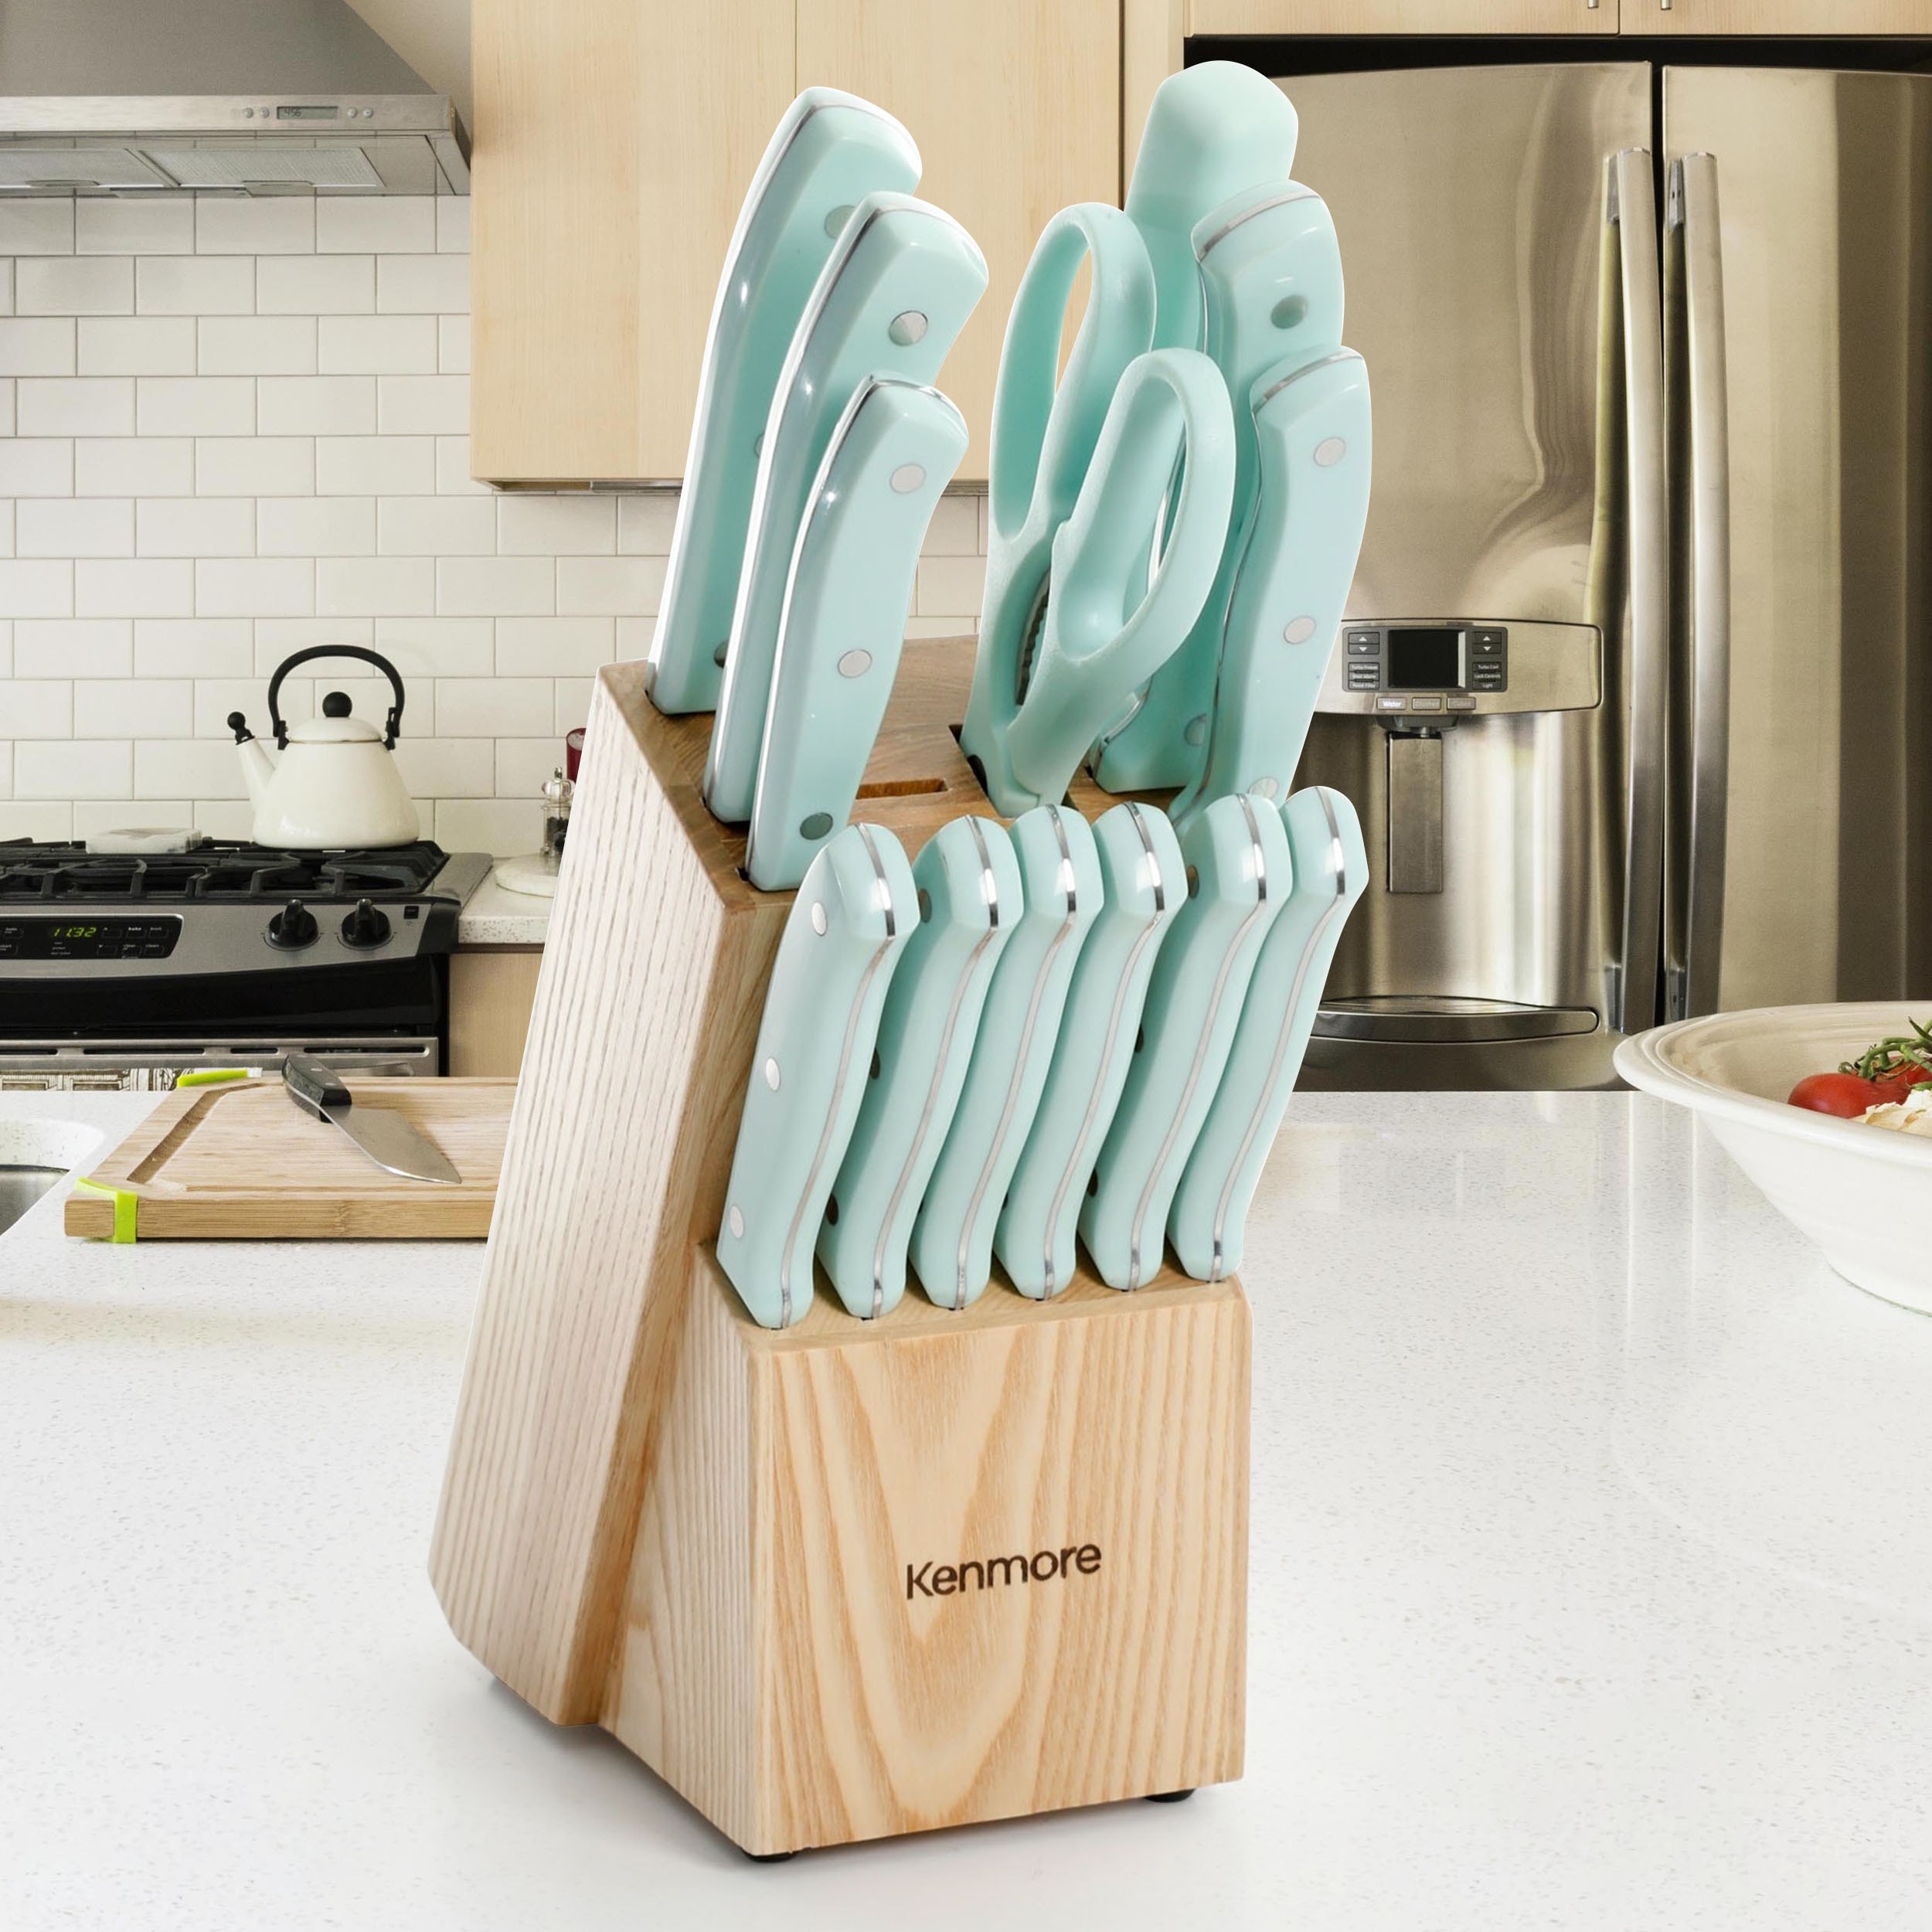 Martha Stewart 14pc Stainless Steel Cutlery Set w/ Wood Block 